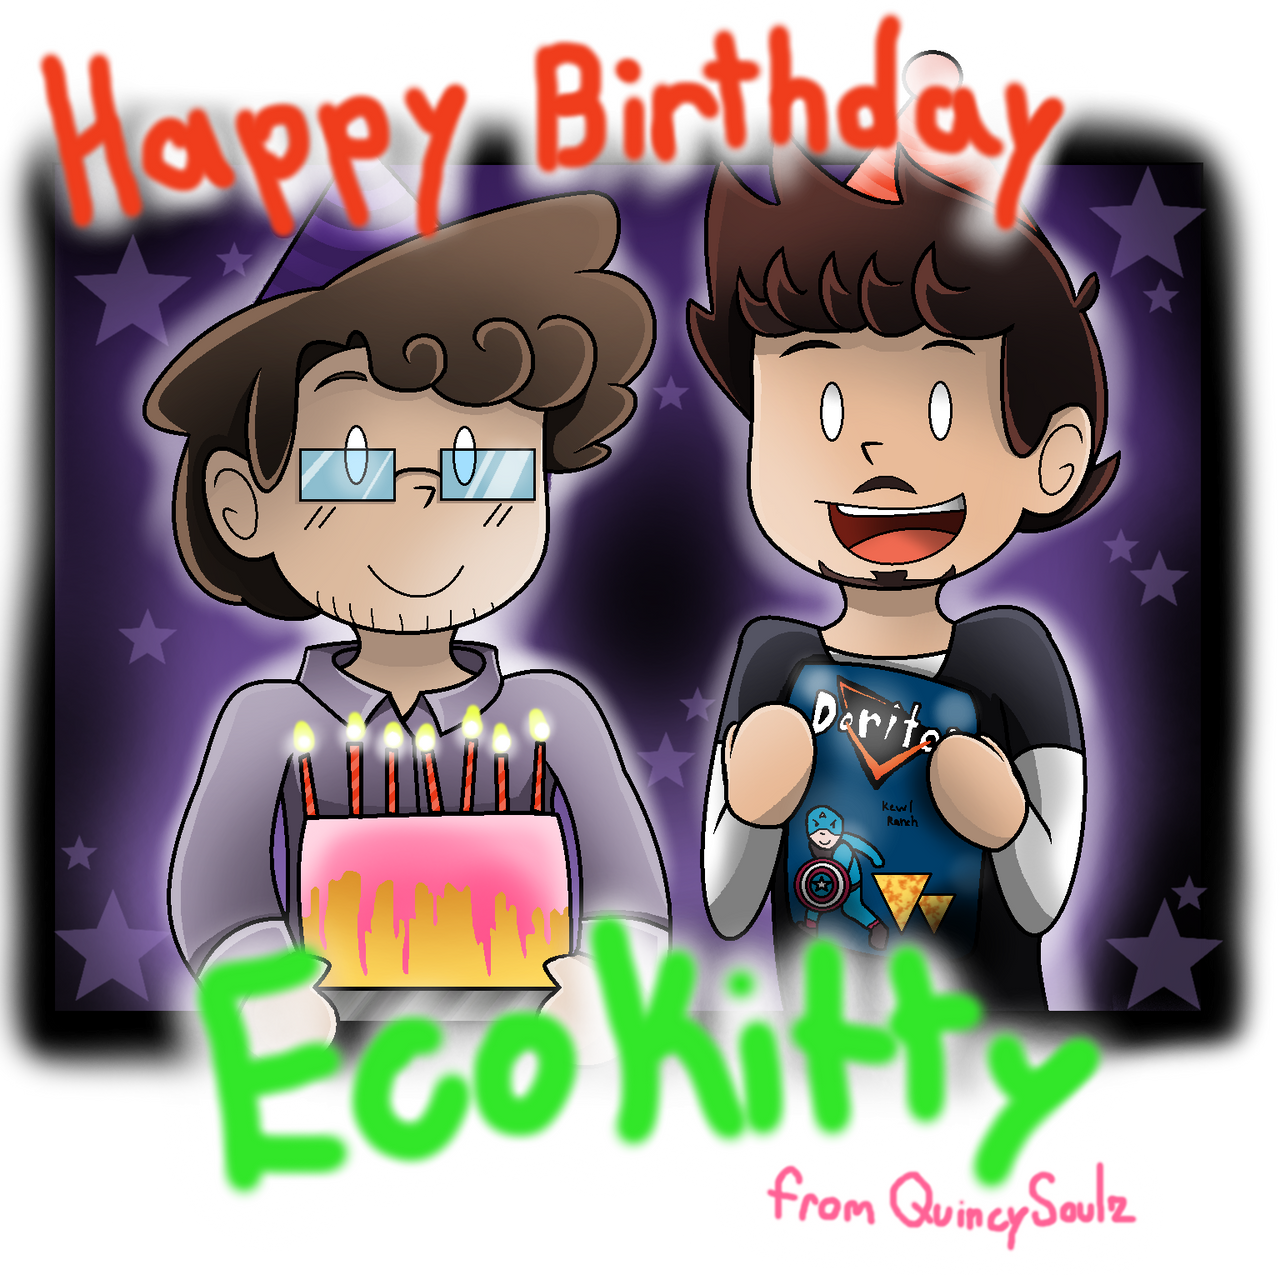 Happy (late) Birthday EcoKitty!